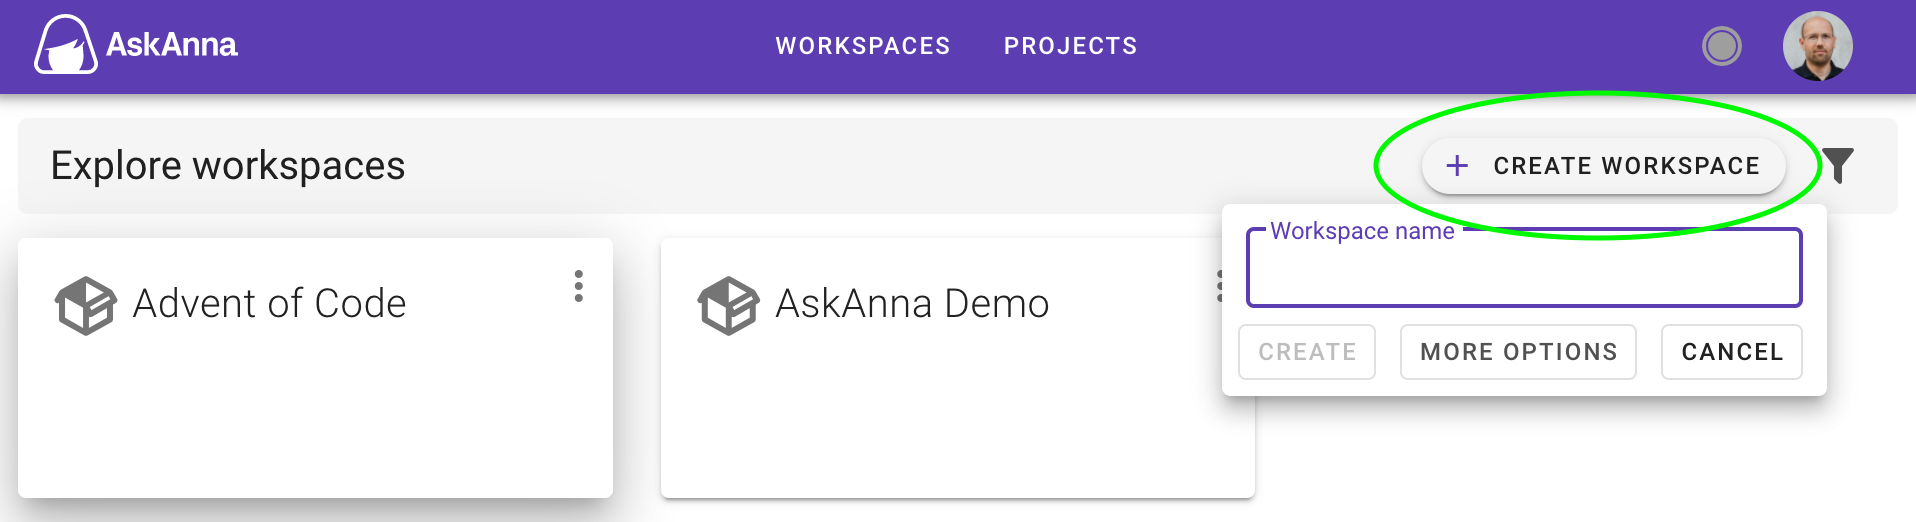 Create a new AskAnna workspace